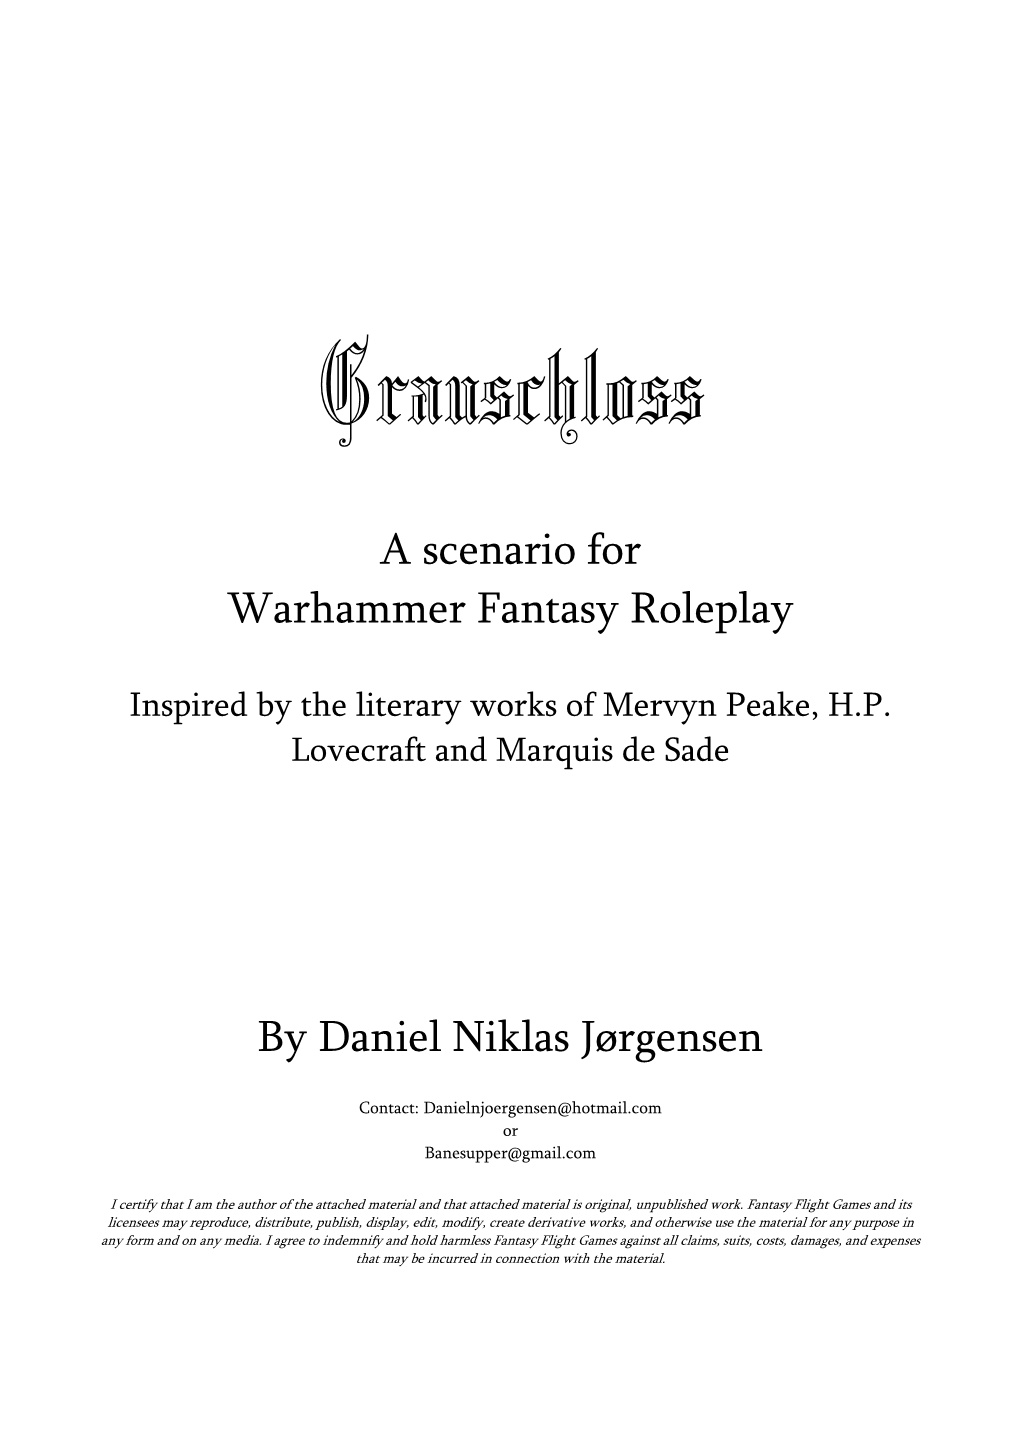 A Scenario for Warhammer Fantasy Roleplay by Daniel Niklas Jørgensen